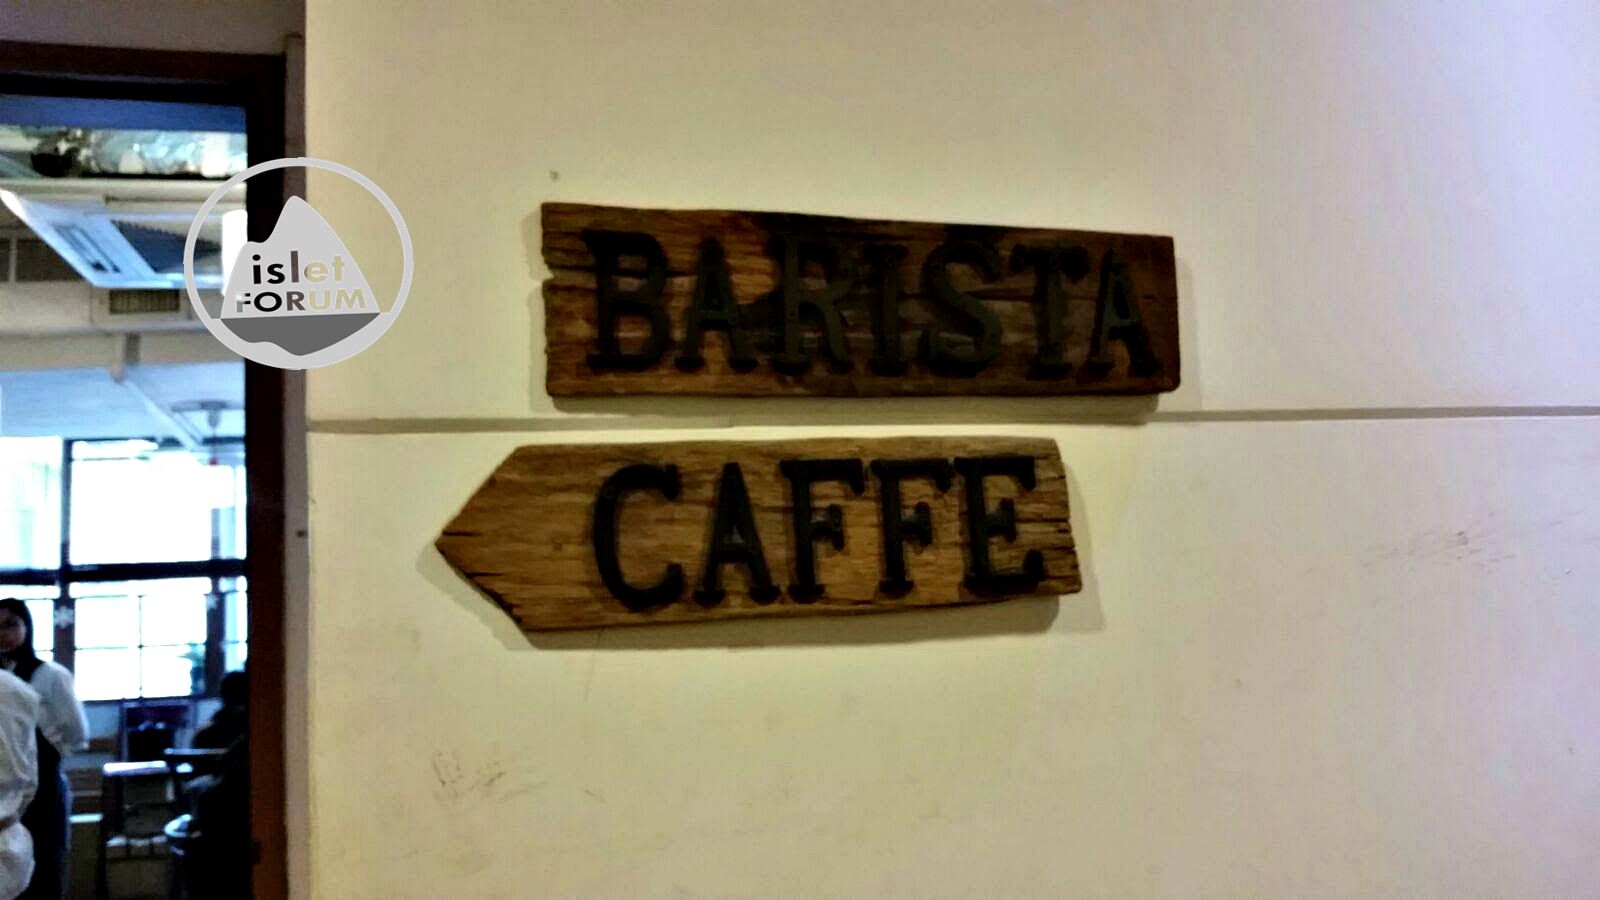 barista caffee (1).jpg